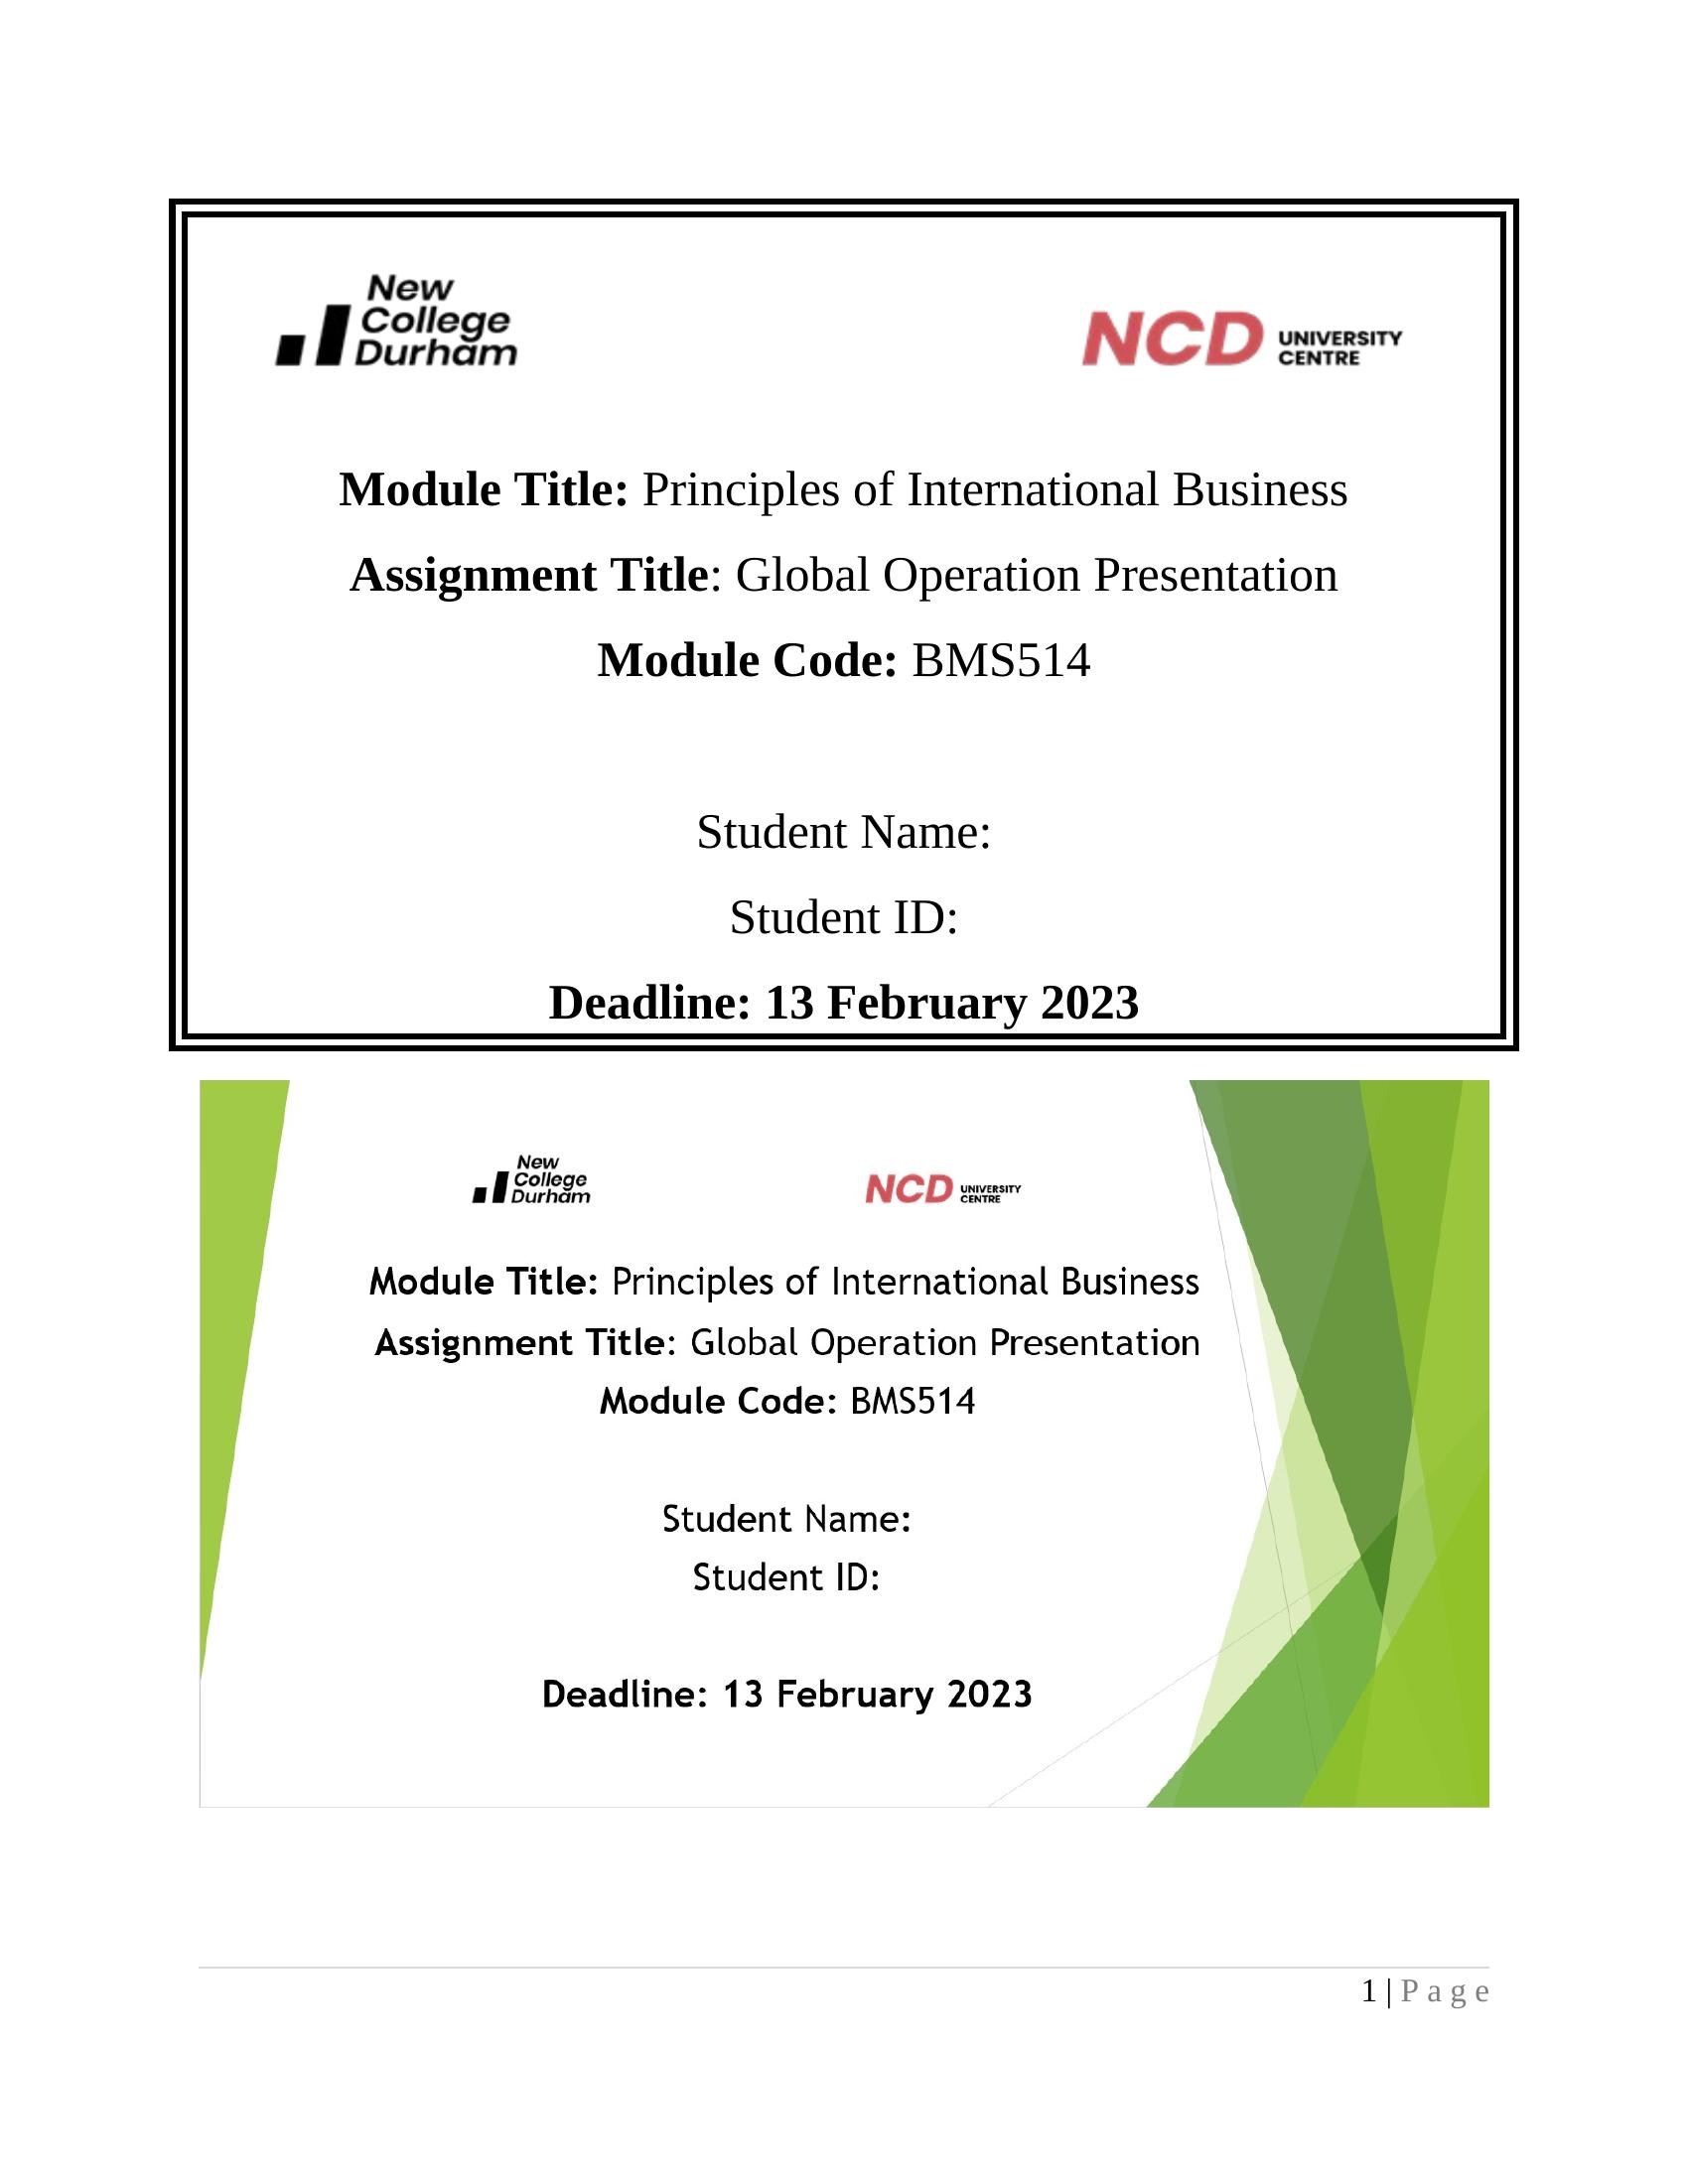 Global Operation Presentation- Notes and Slide